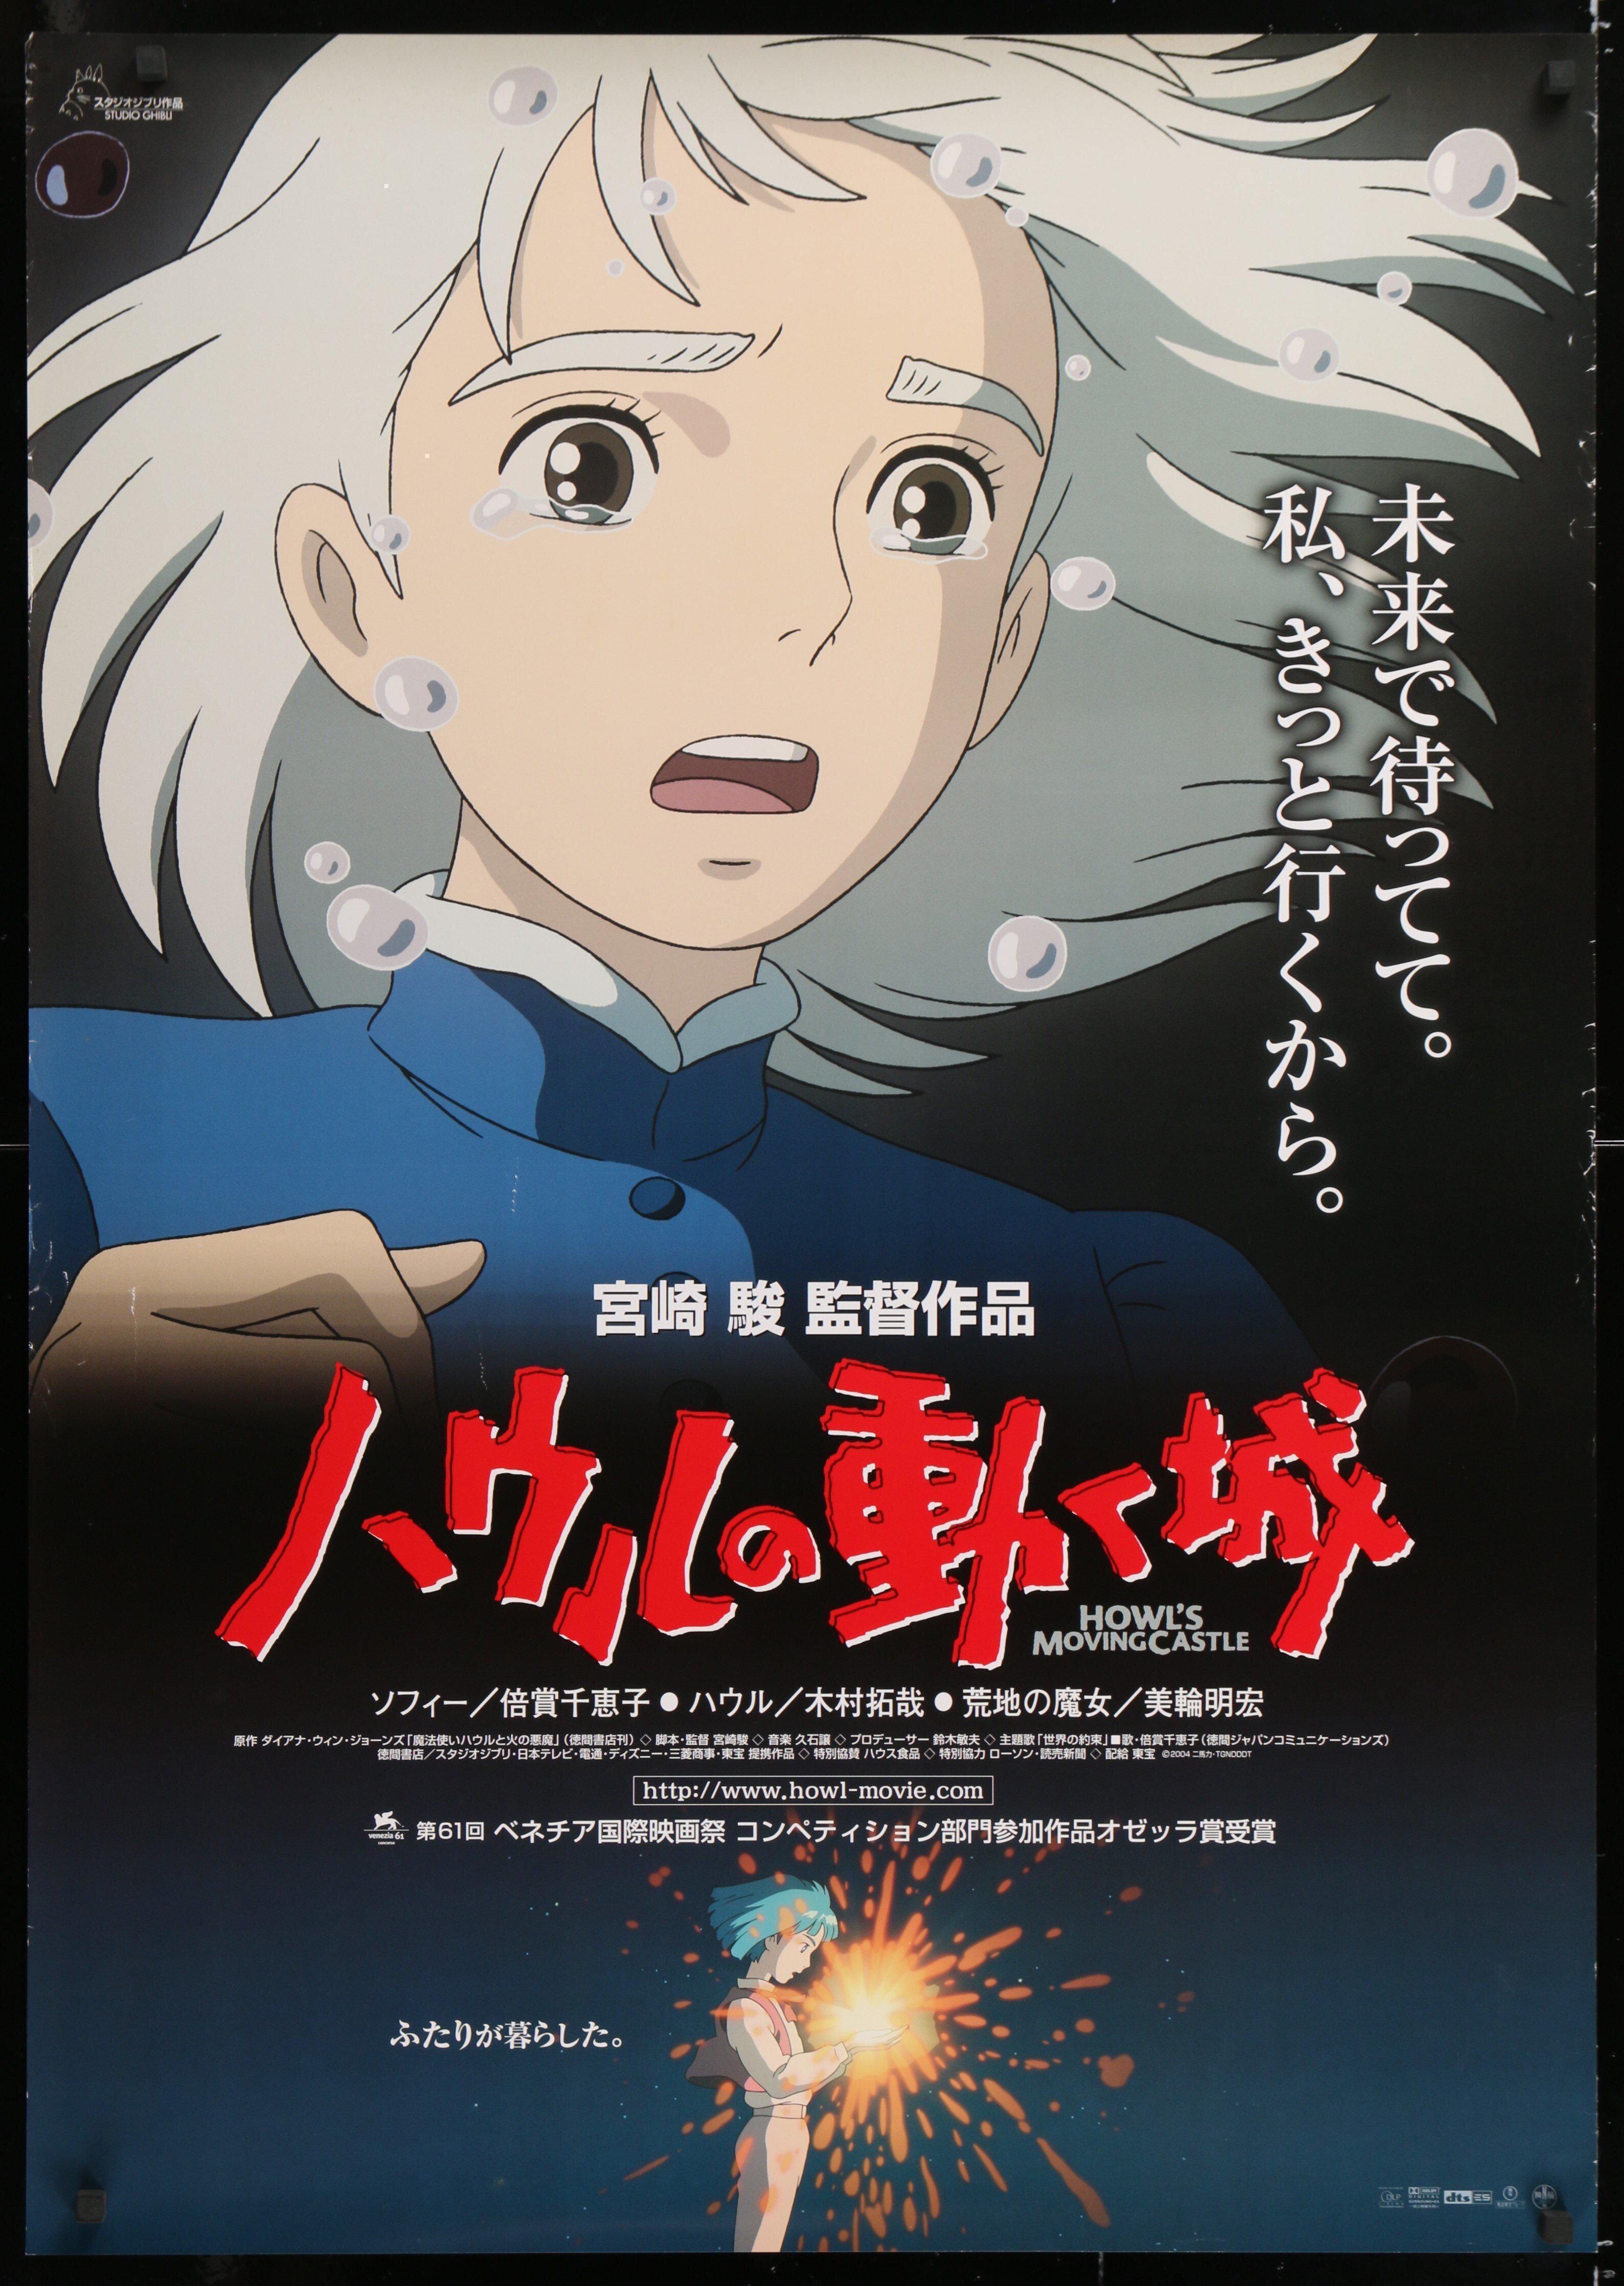 MOVIE: Howl's Moving Castle by Hayao Miyazaki – GEEKY MYTHOLOGY